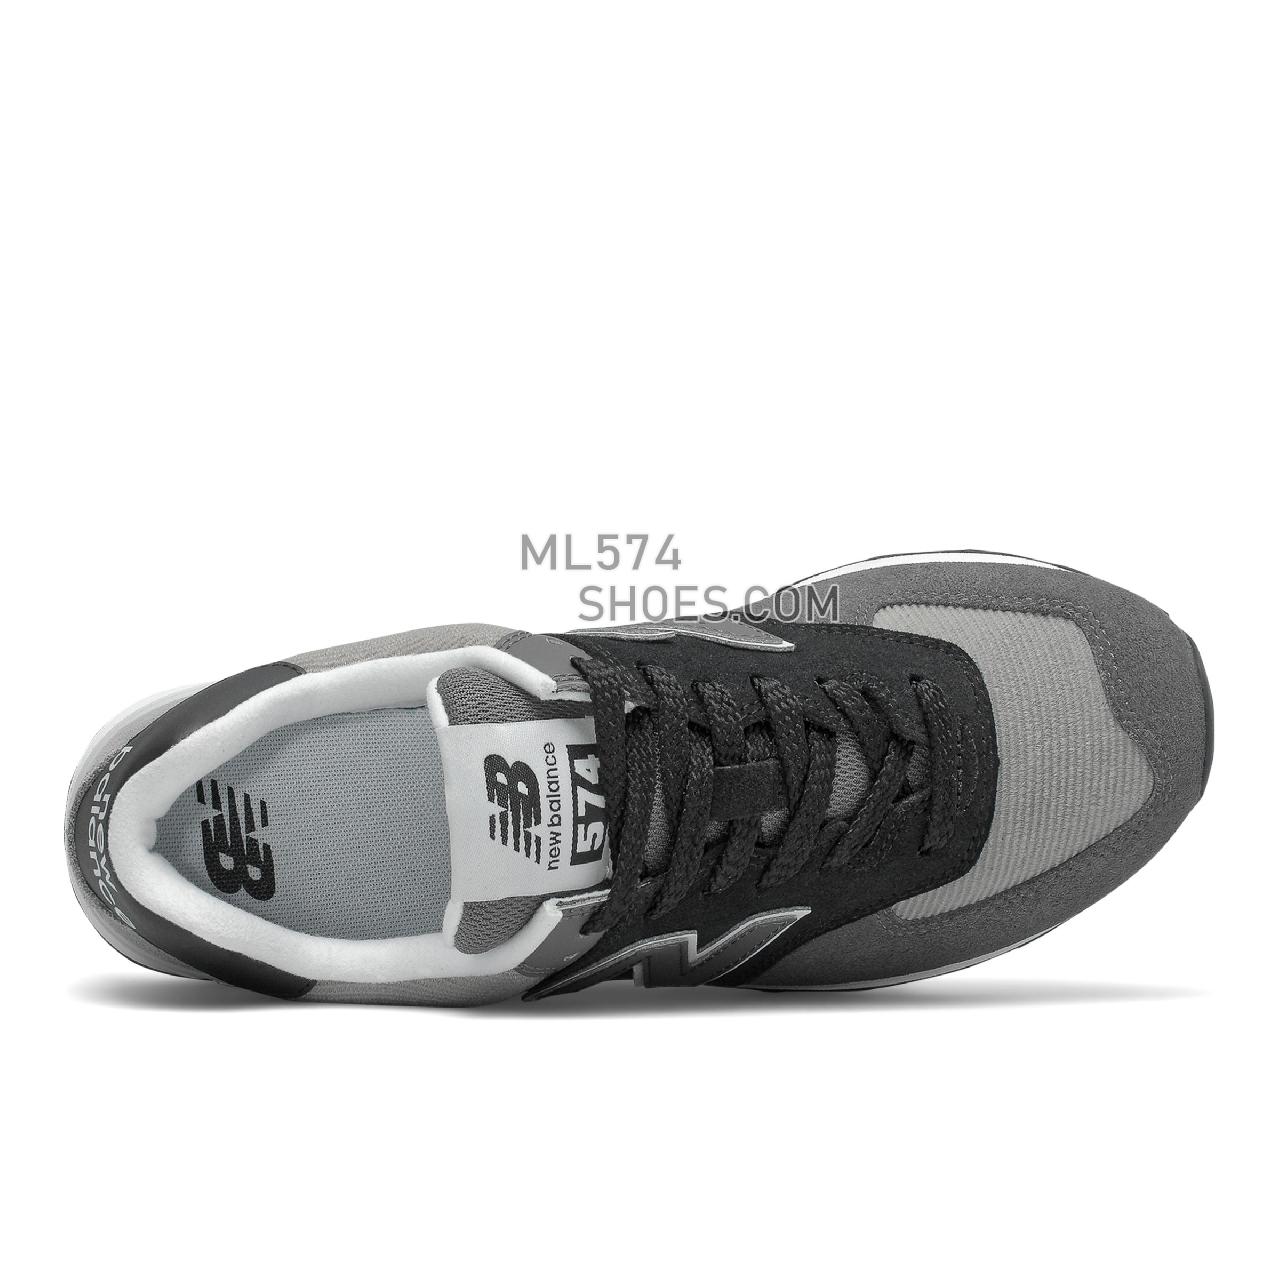 New Balance 574 - Women's Classic Sneakers - Black with Grey - WL574WU2